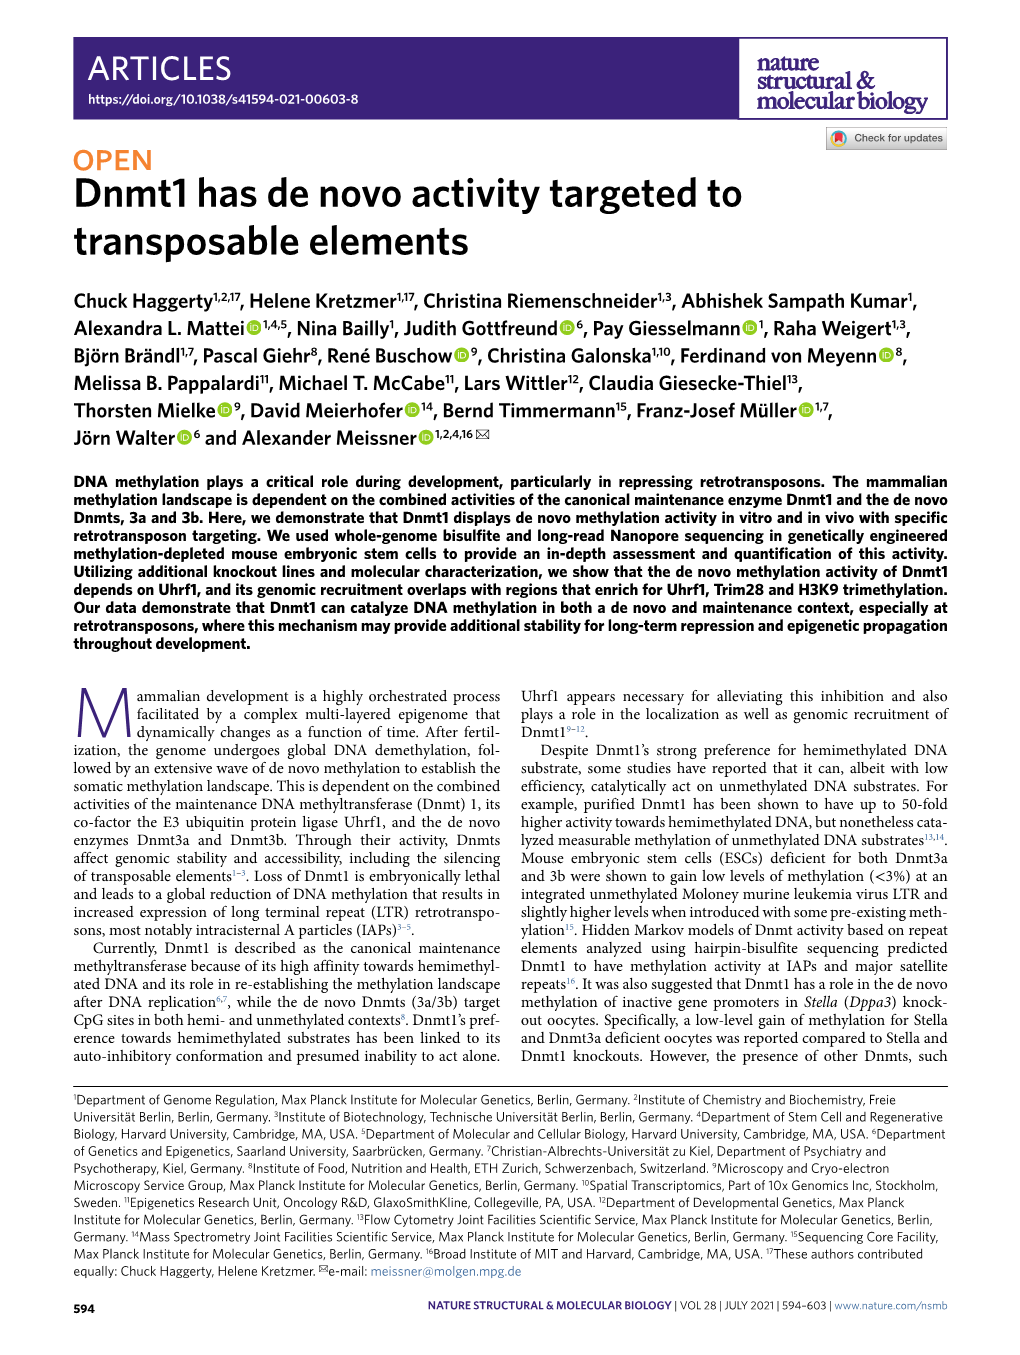 Dnmt1 Has De Novo Activity Targeted to Transposable Elements